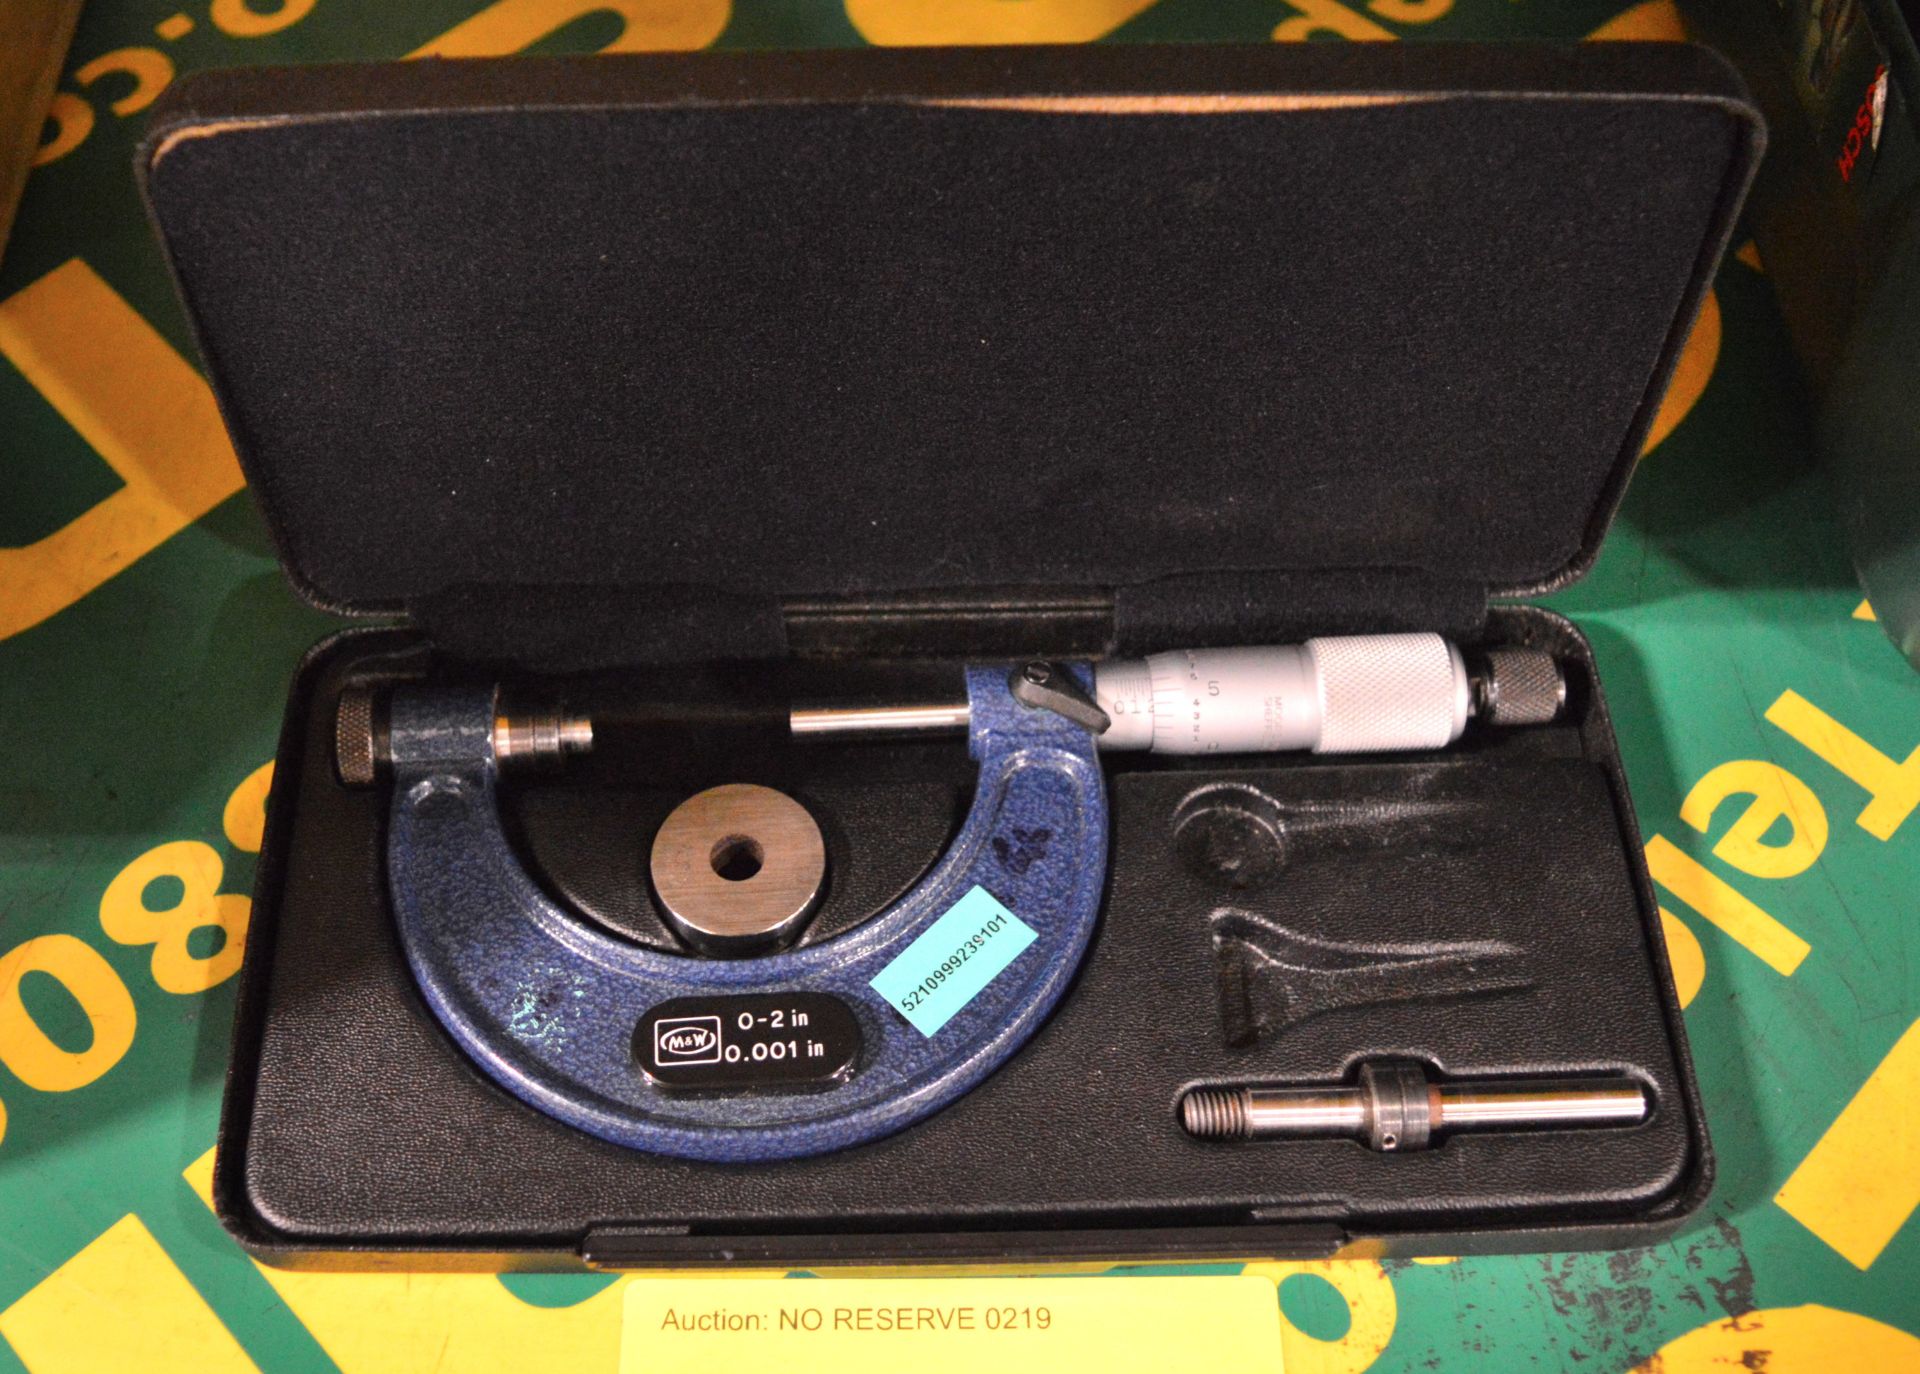 Moore & Wright Caliper Micrometer 0-2in 0.001in.